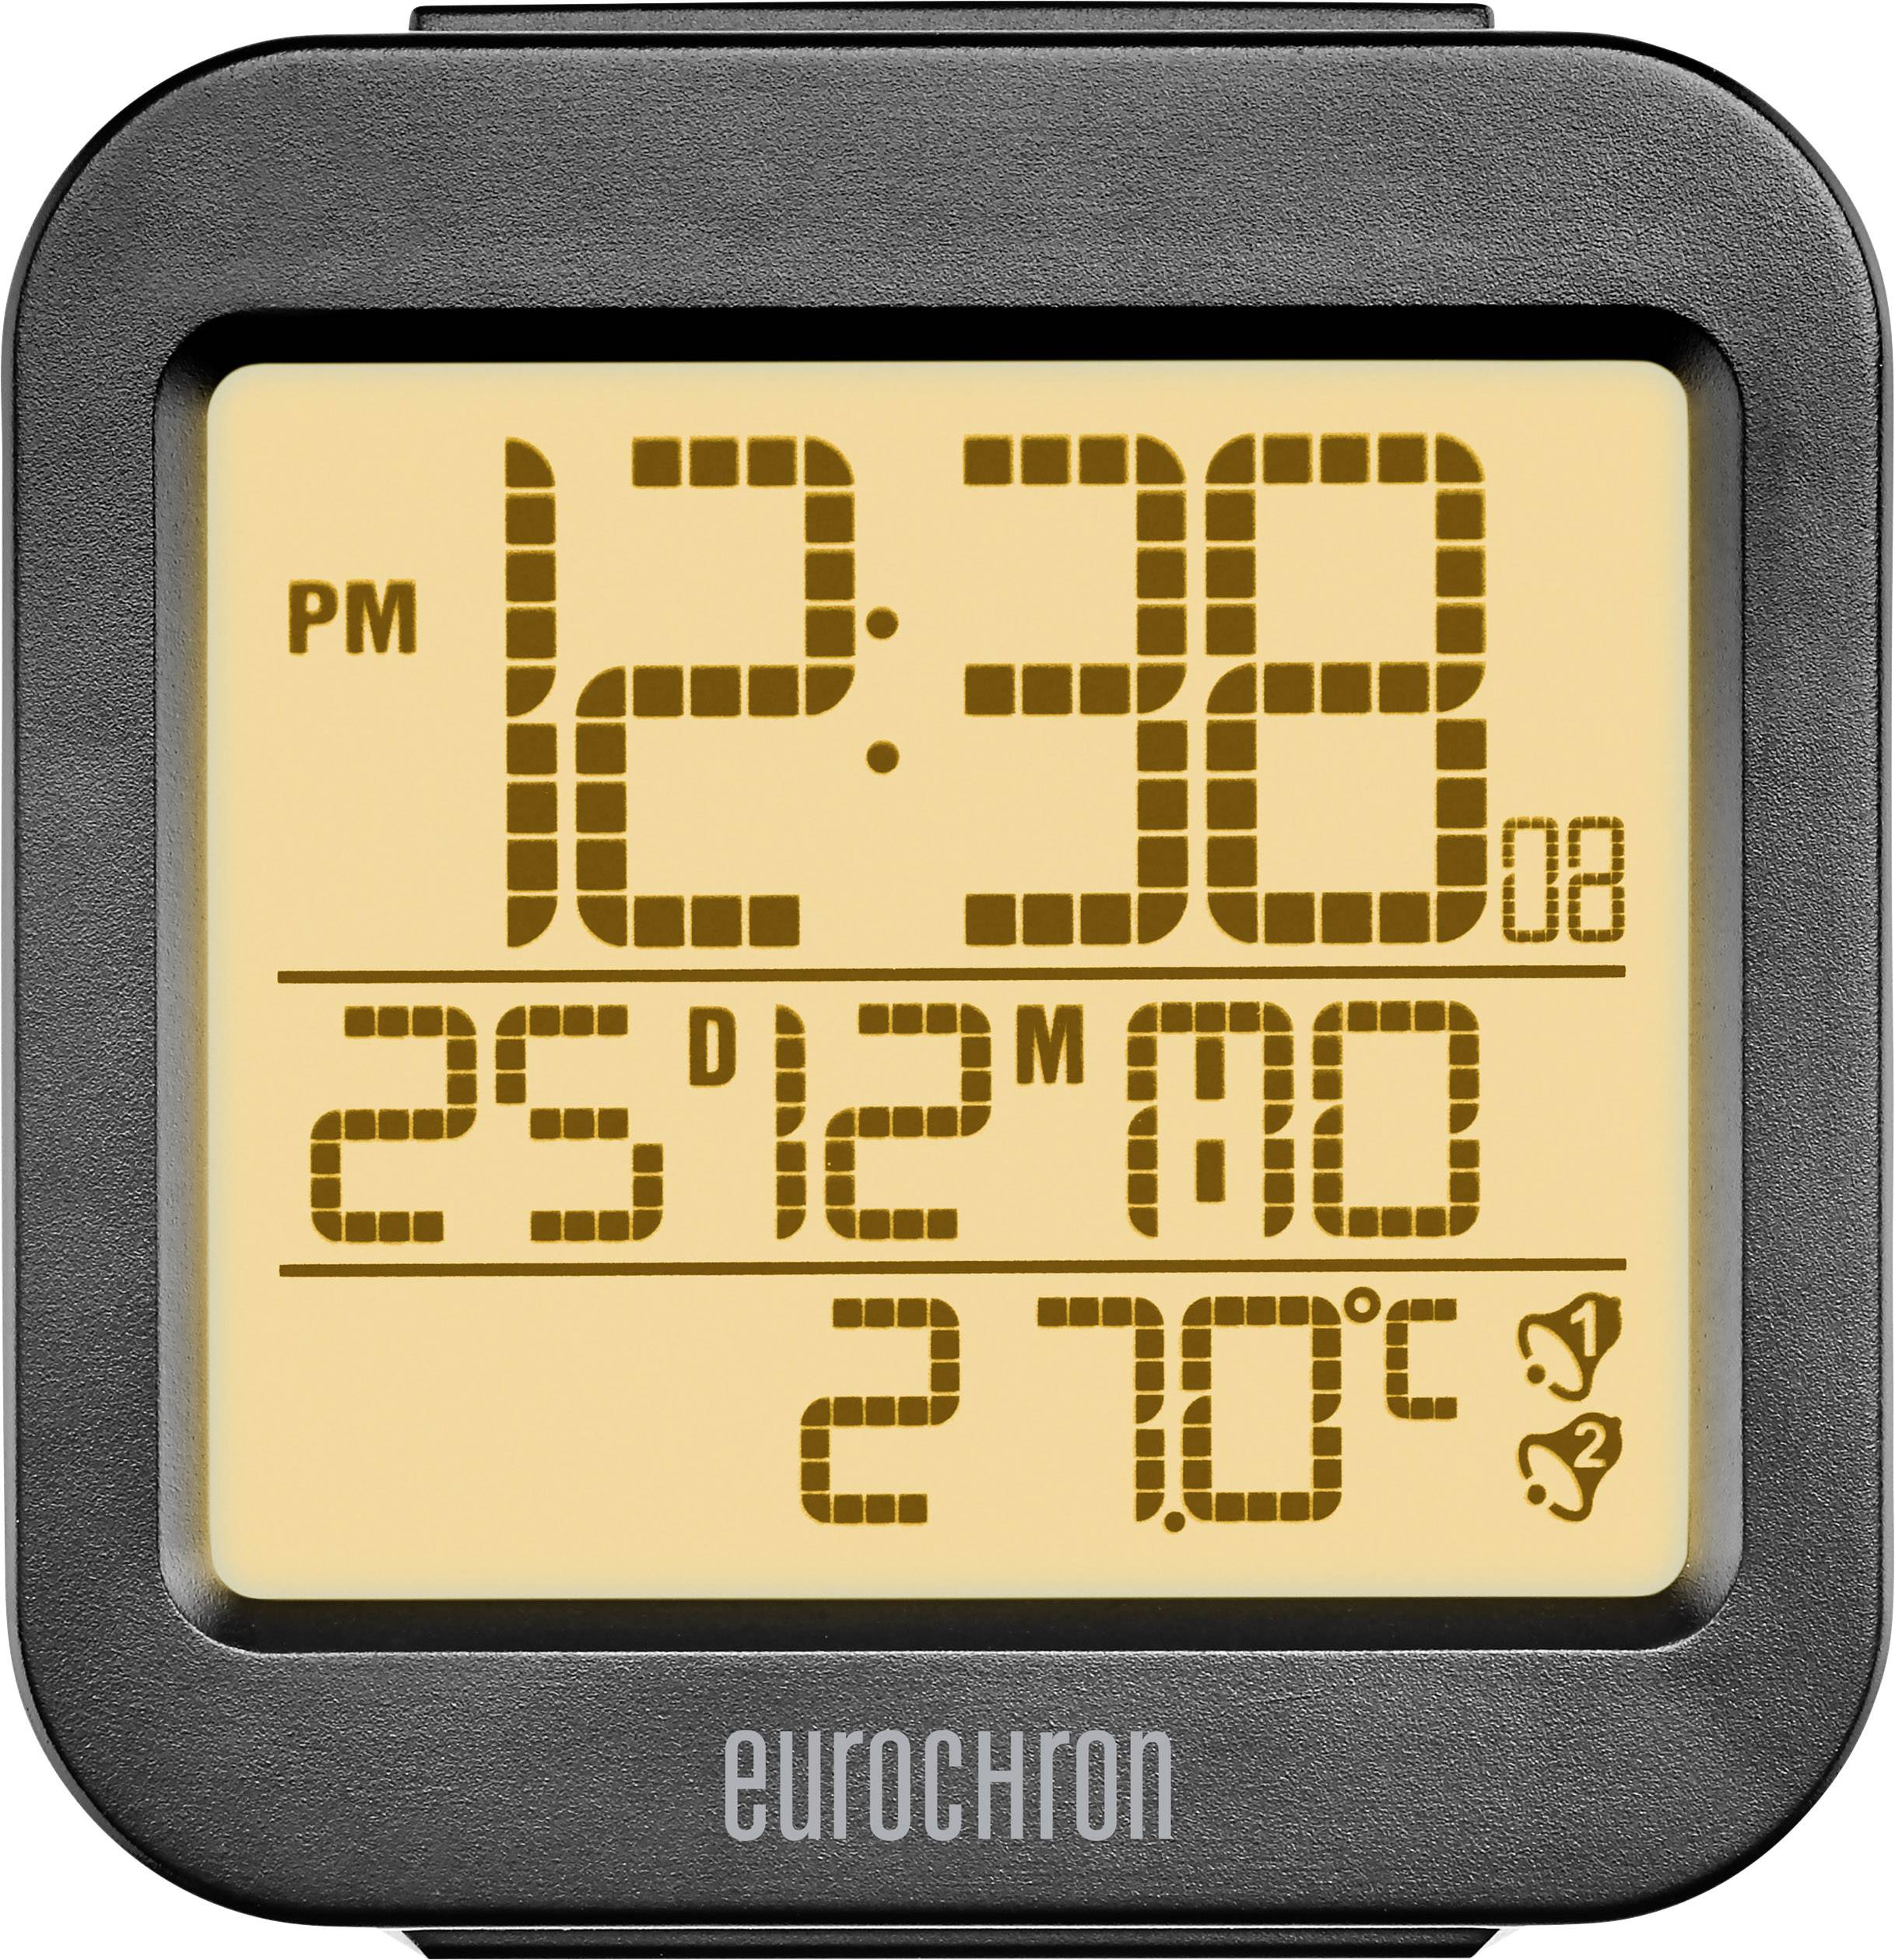 eurochron clock manual